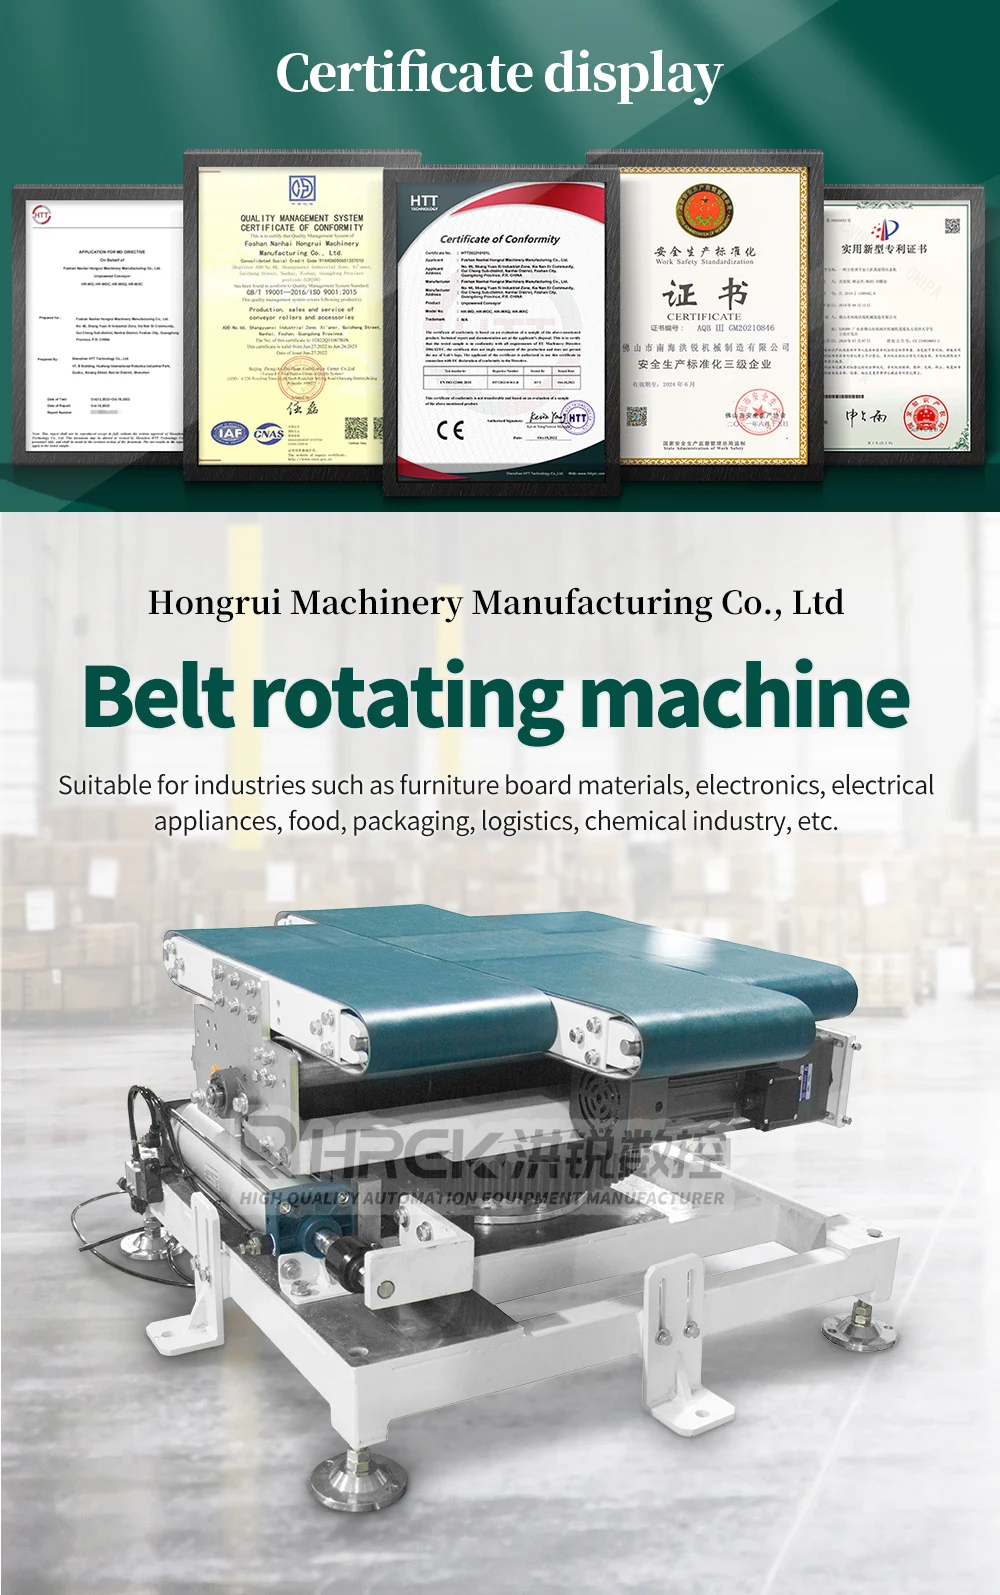 Innovative Belt Conveyor Rotary Machine Enabling Efficient Logistics factory